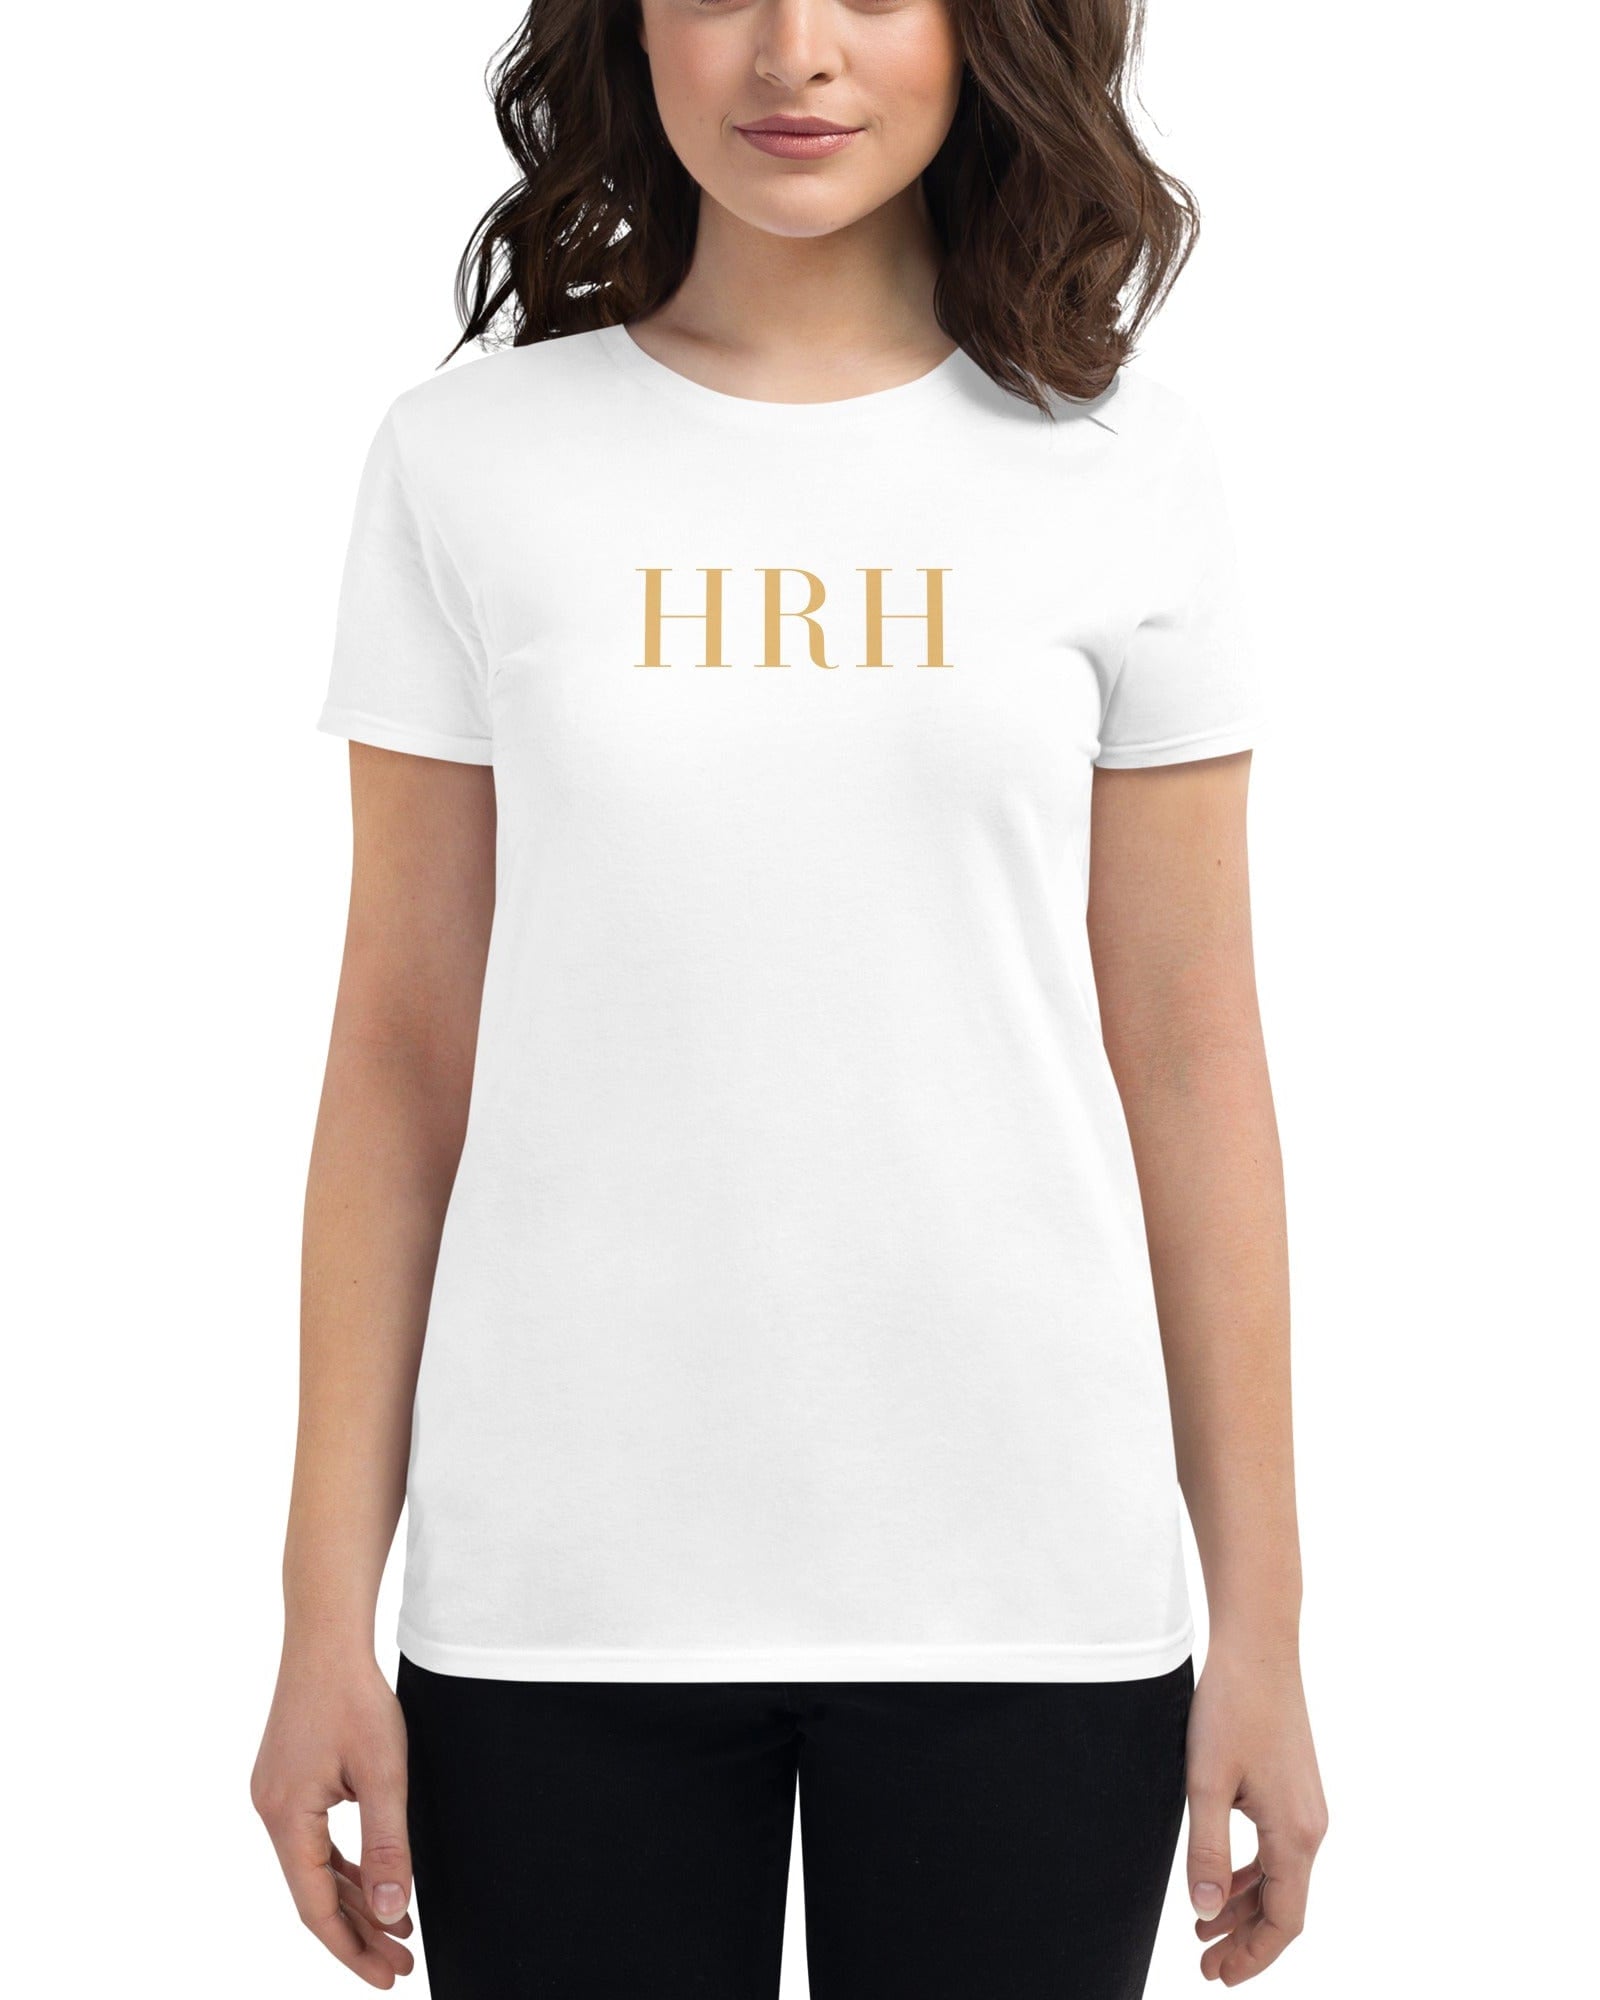 HRH Women's T-shirt for Her Royal Highness White / S Shirts & Tops Jolly & Goode